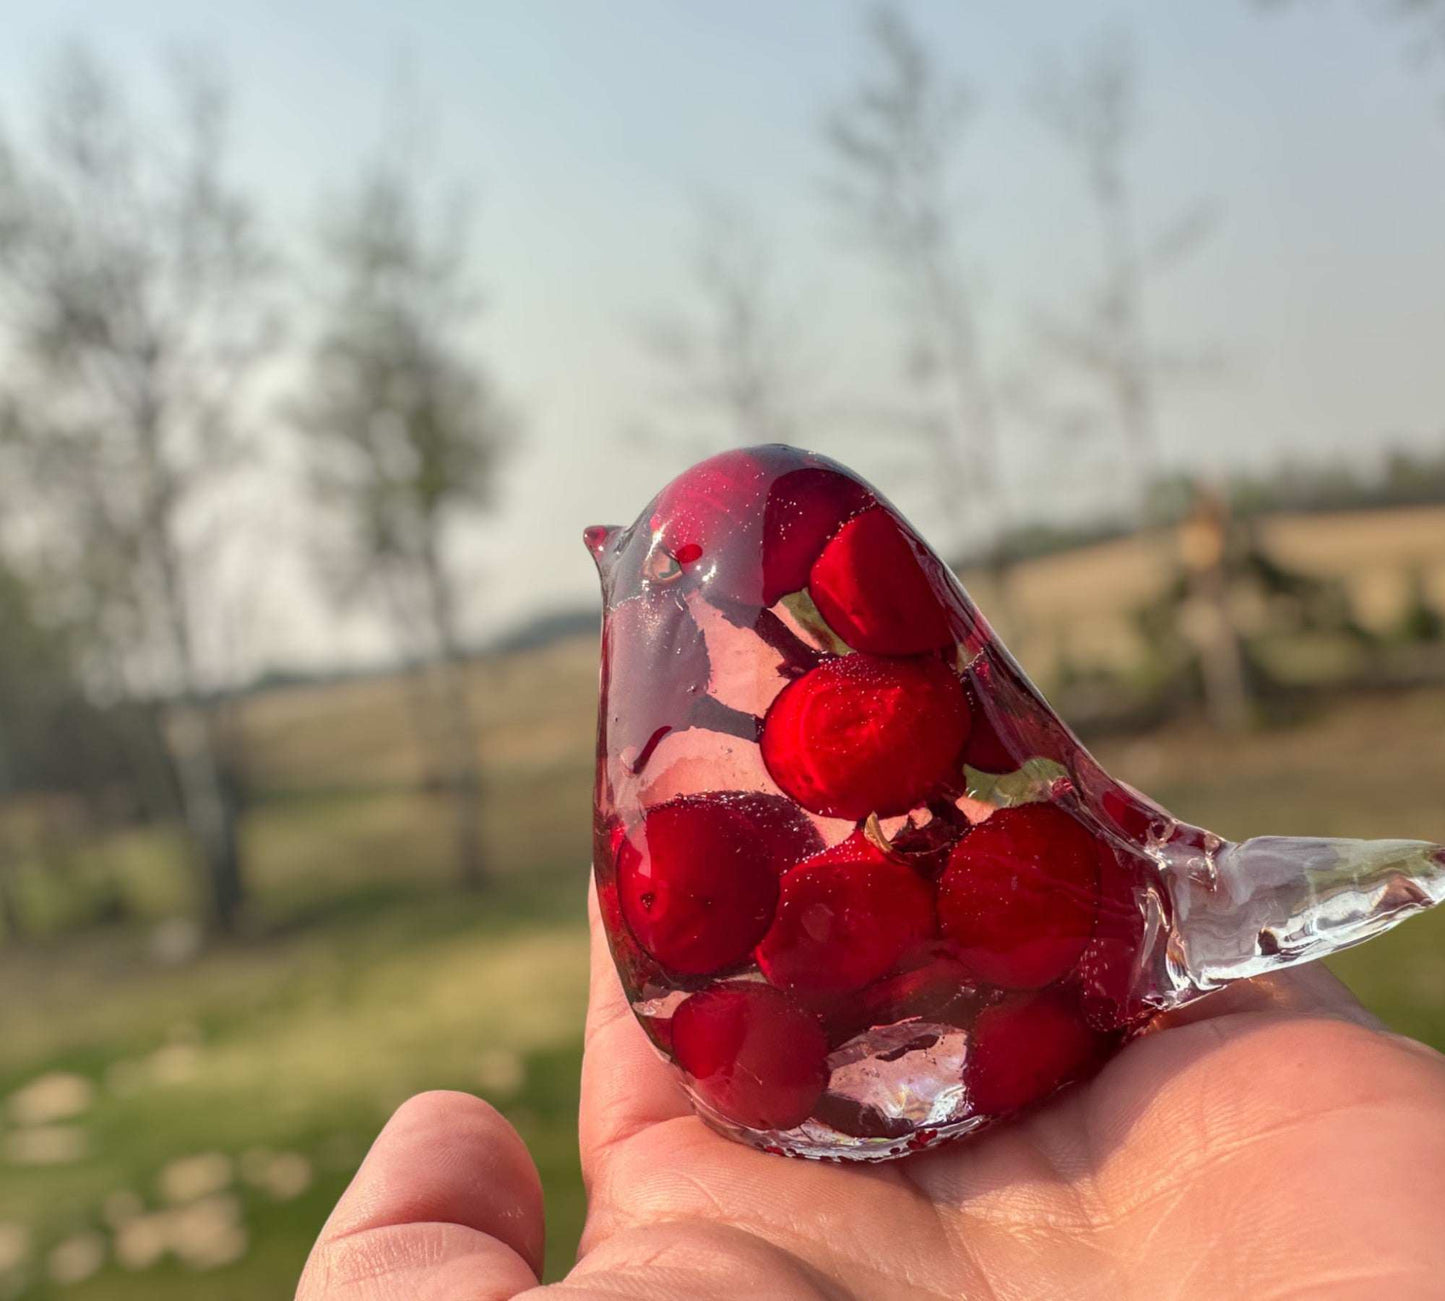 Sculpture - Forest Serenade - Handcrafted Red Berry Resin Bird Decor